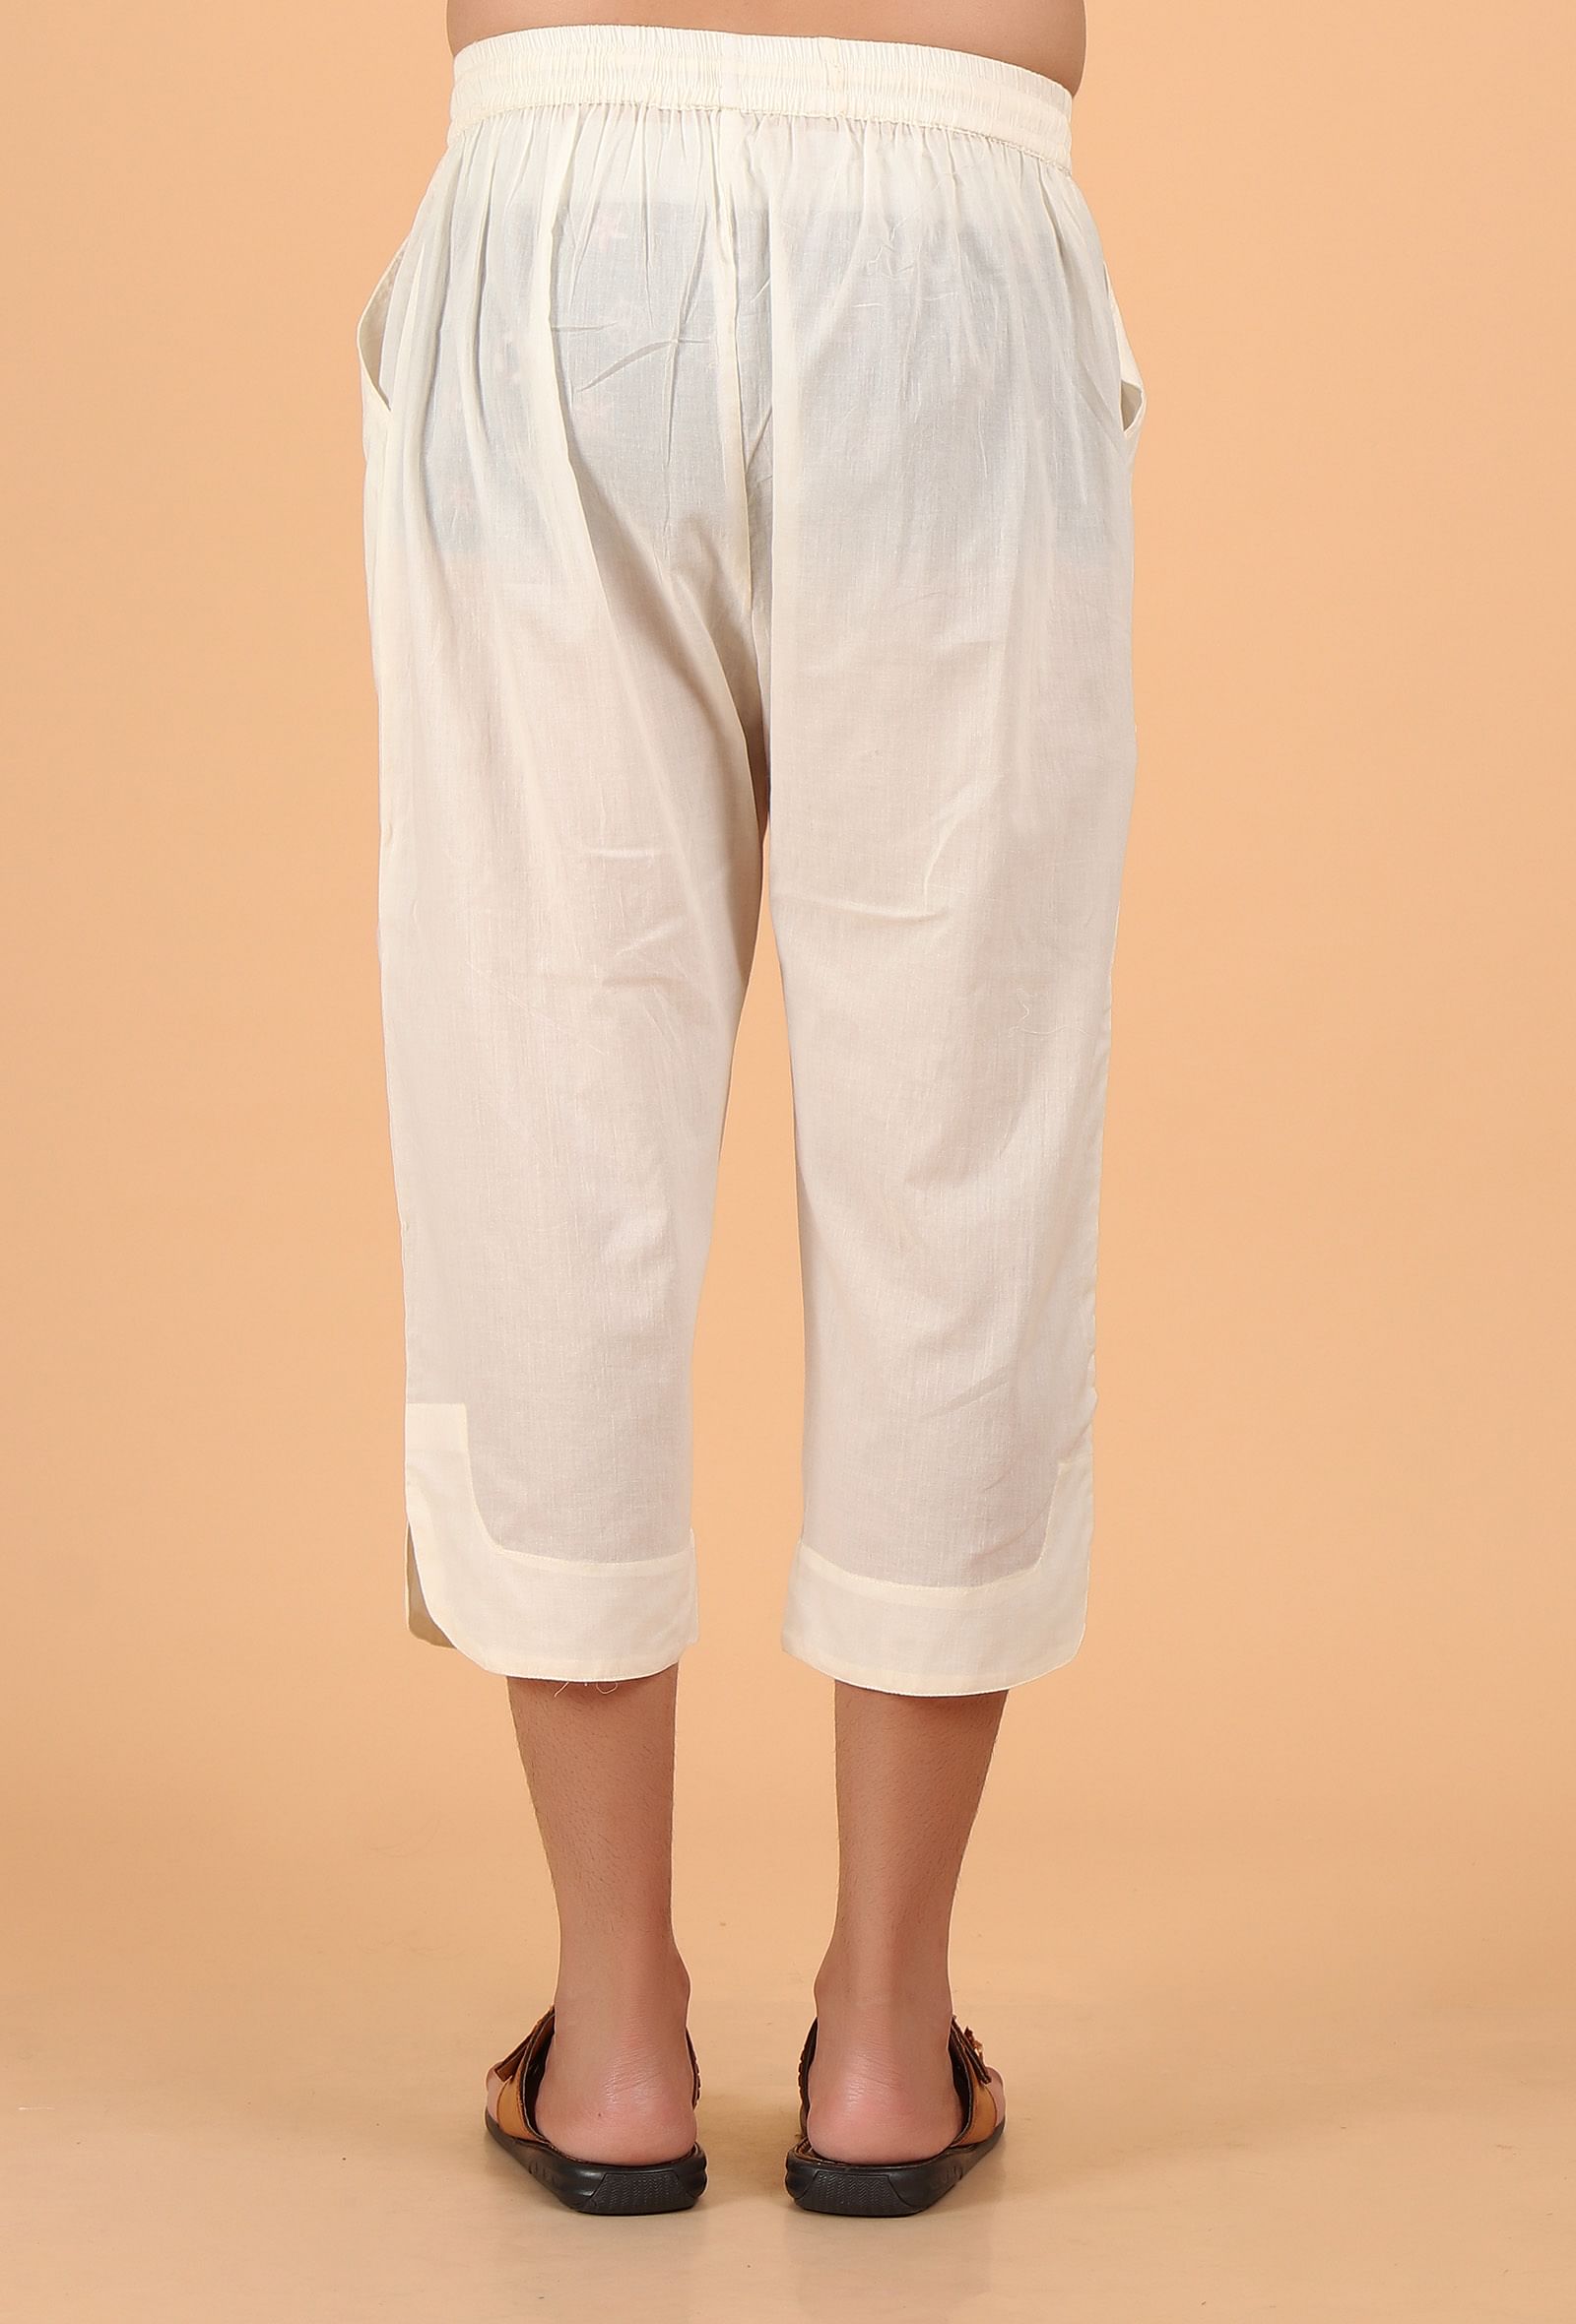 Peach Cotton Mulmul Short Kurta & White Three Quarter Pant